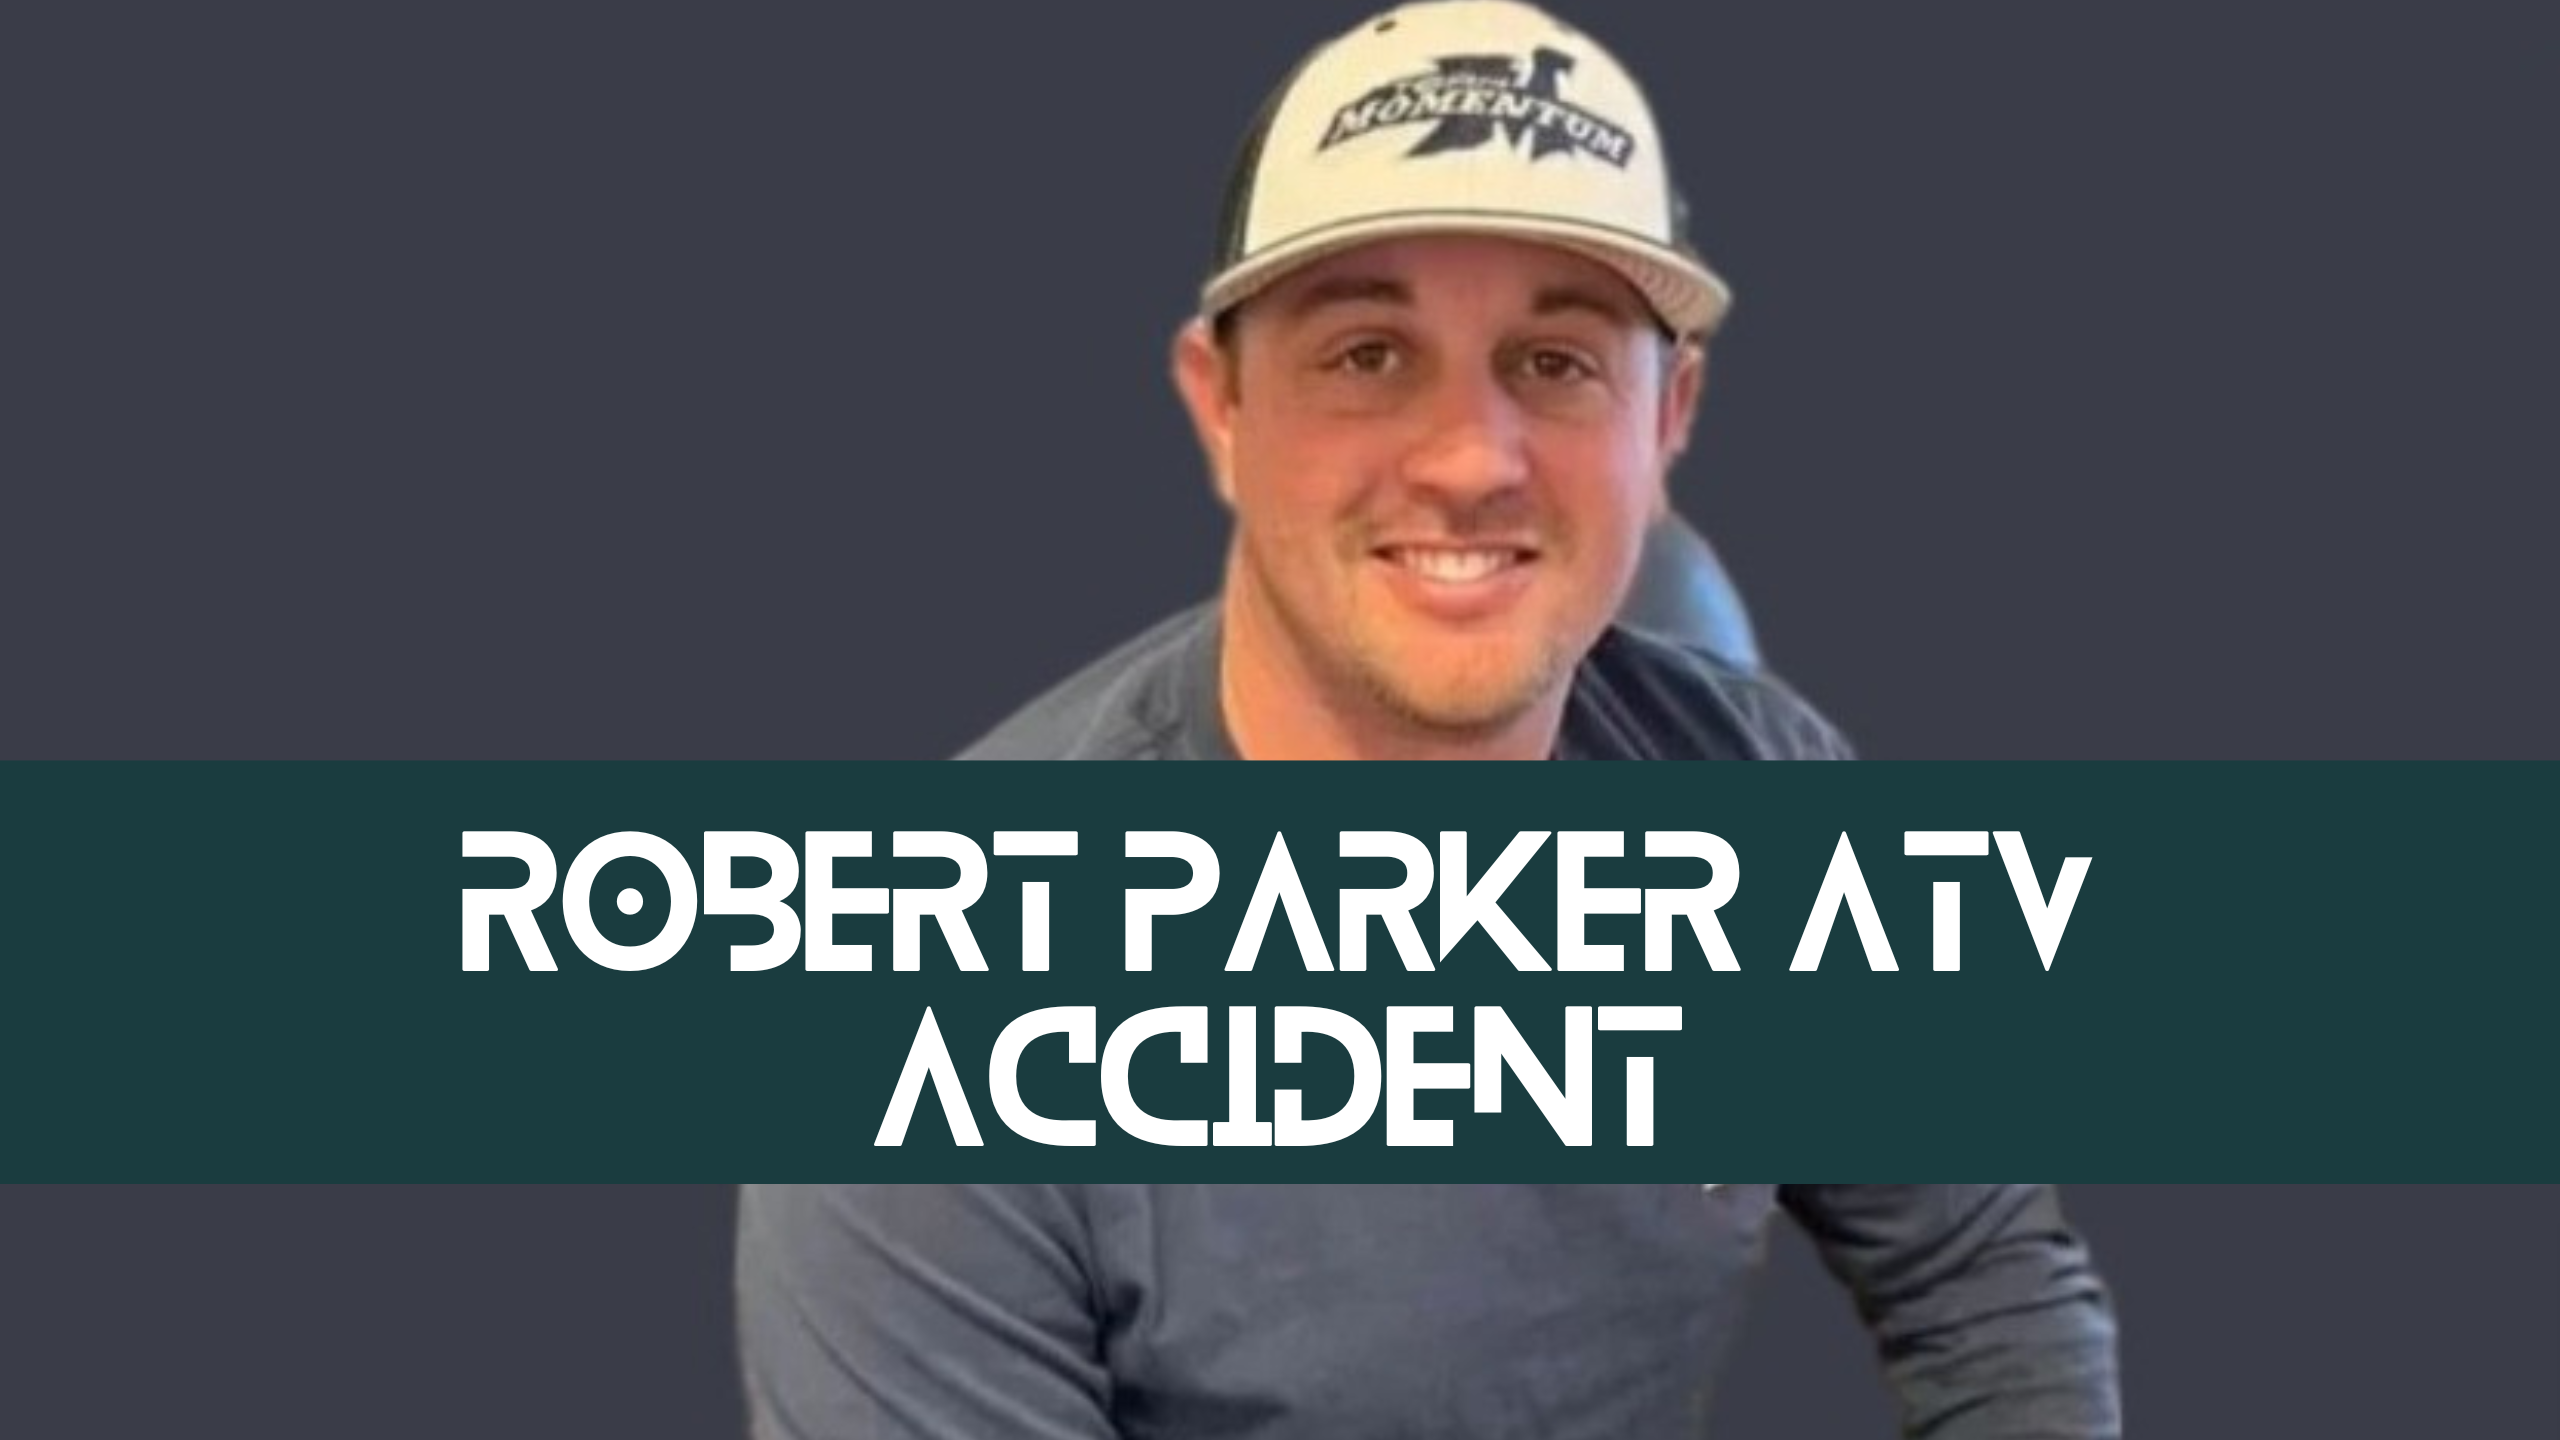 Robert Parker ATV Accident: How Did Robert Parker Die?